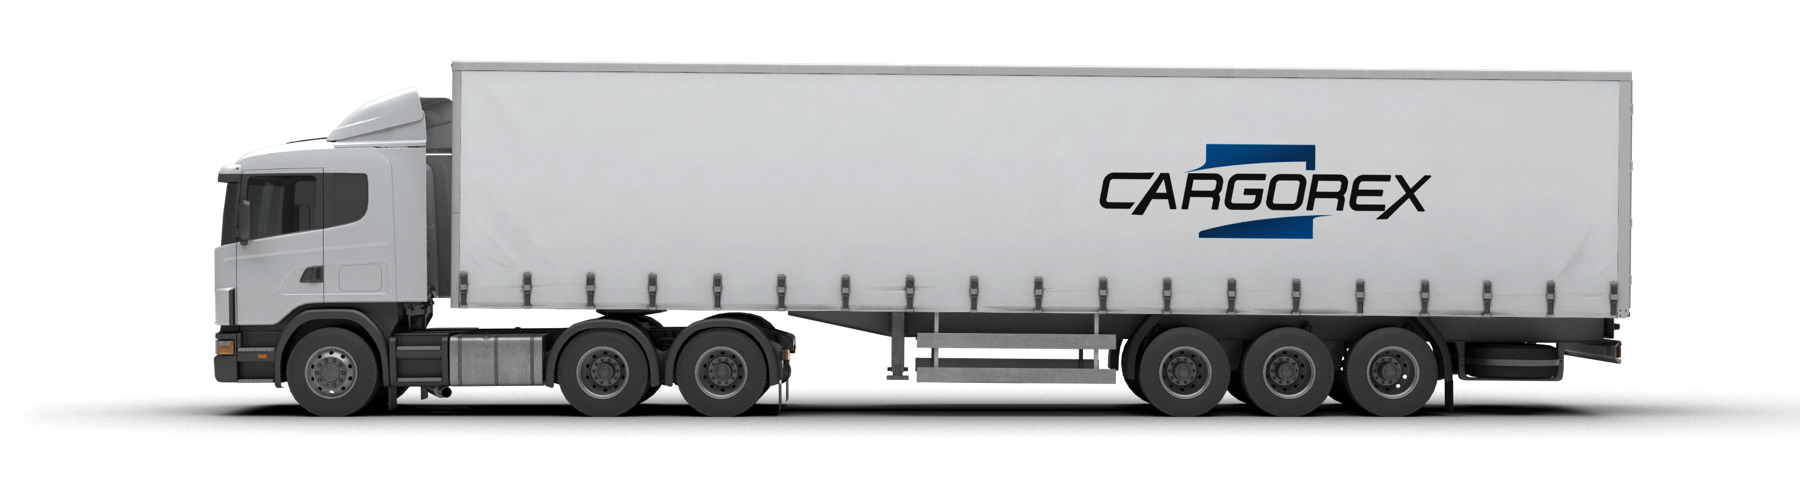 Cargorexpsd online - Dorset Freight Services